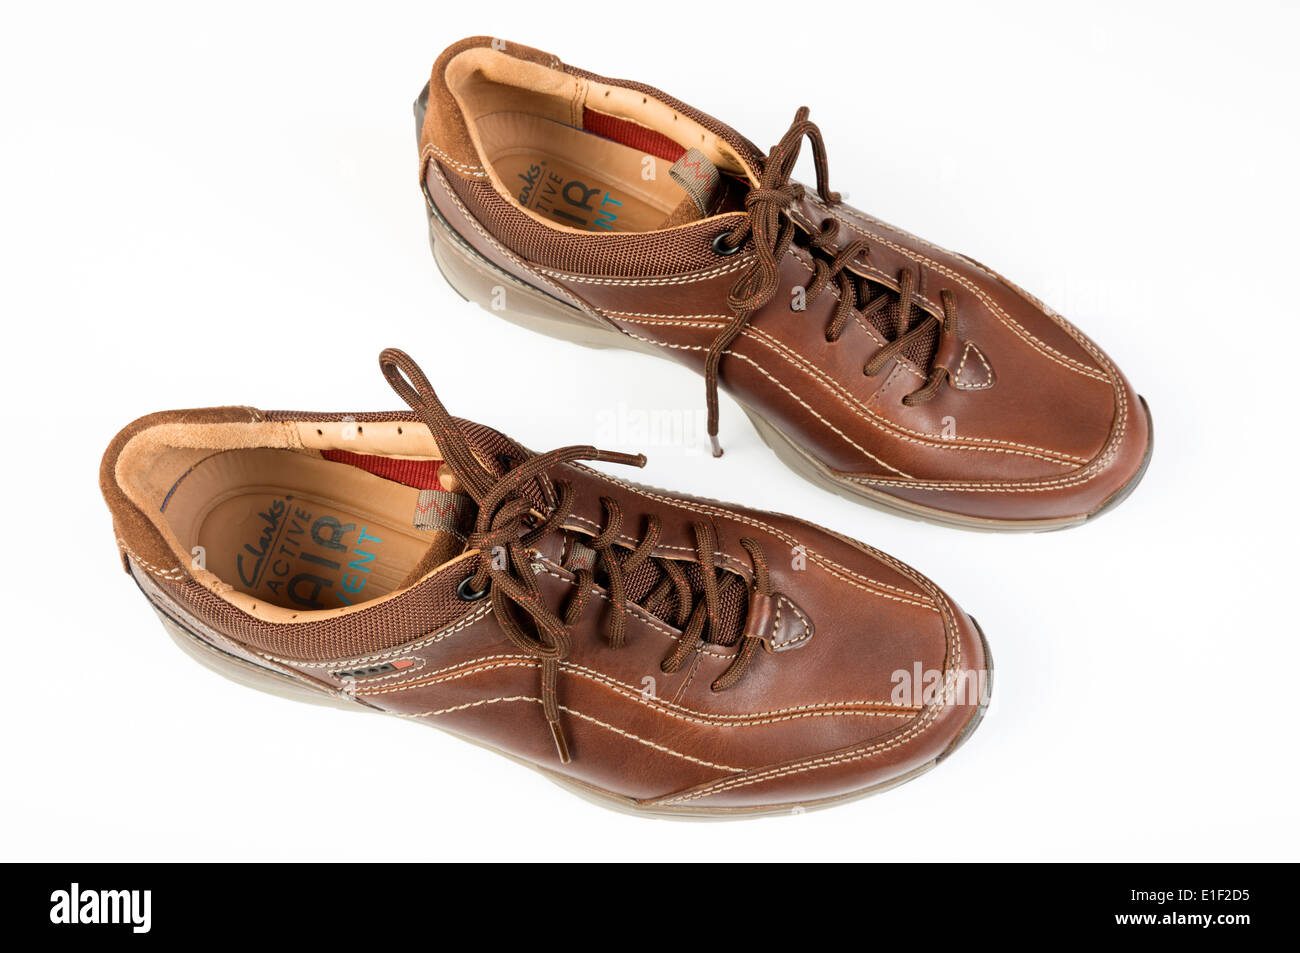 Clarks active air vent mens shoes Stock Photo - Alamy